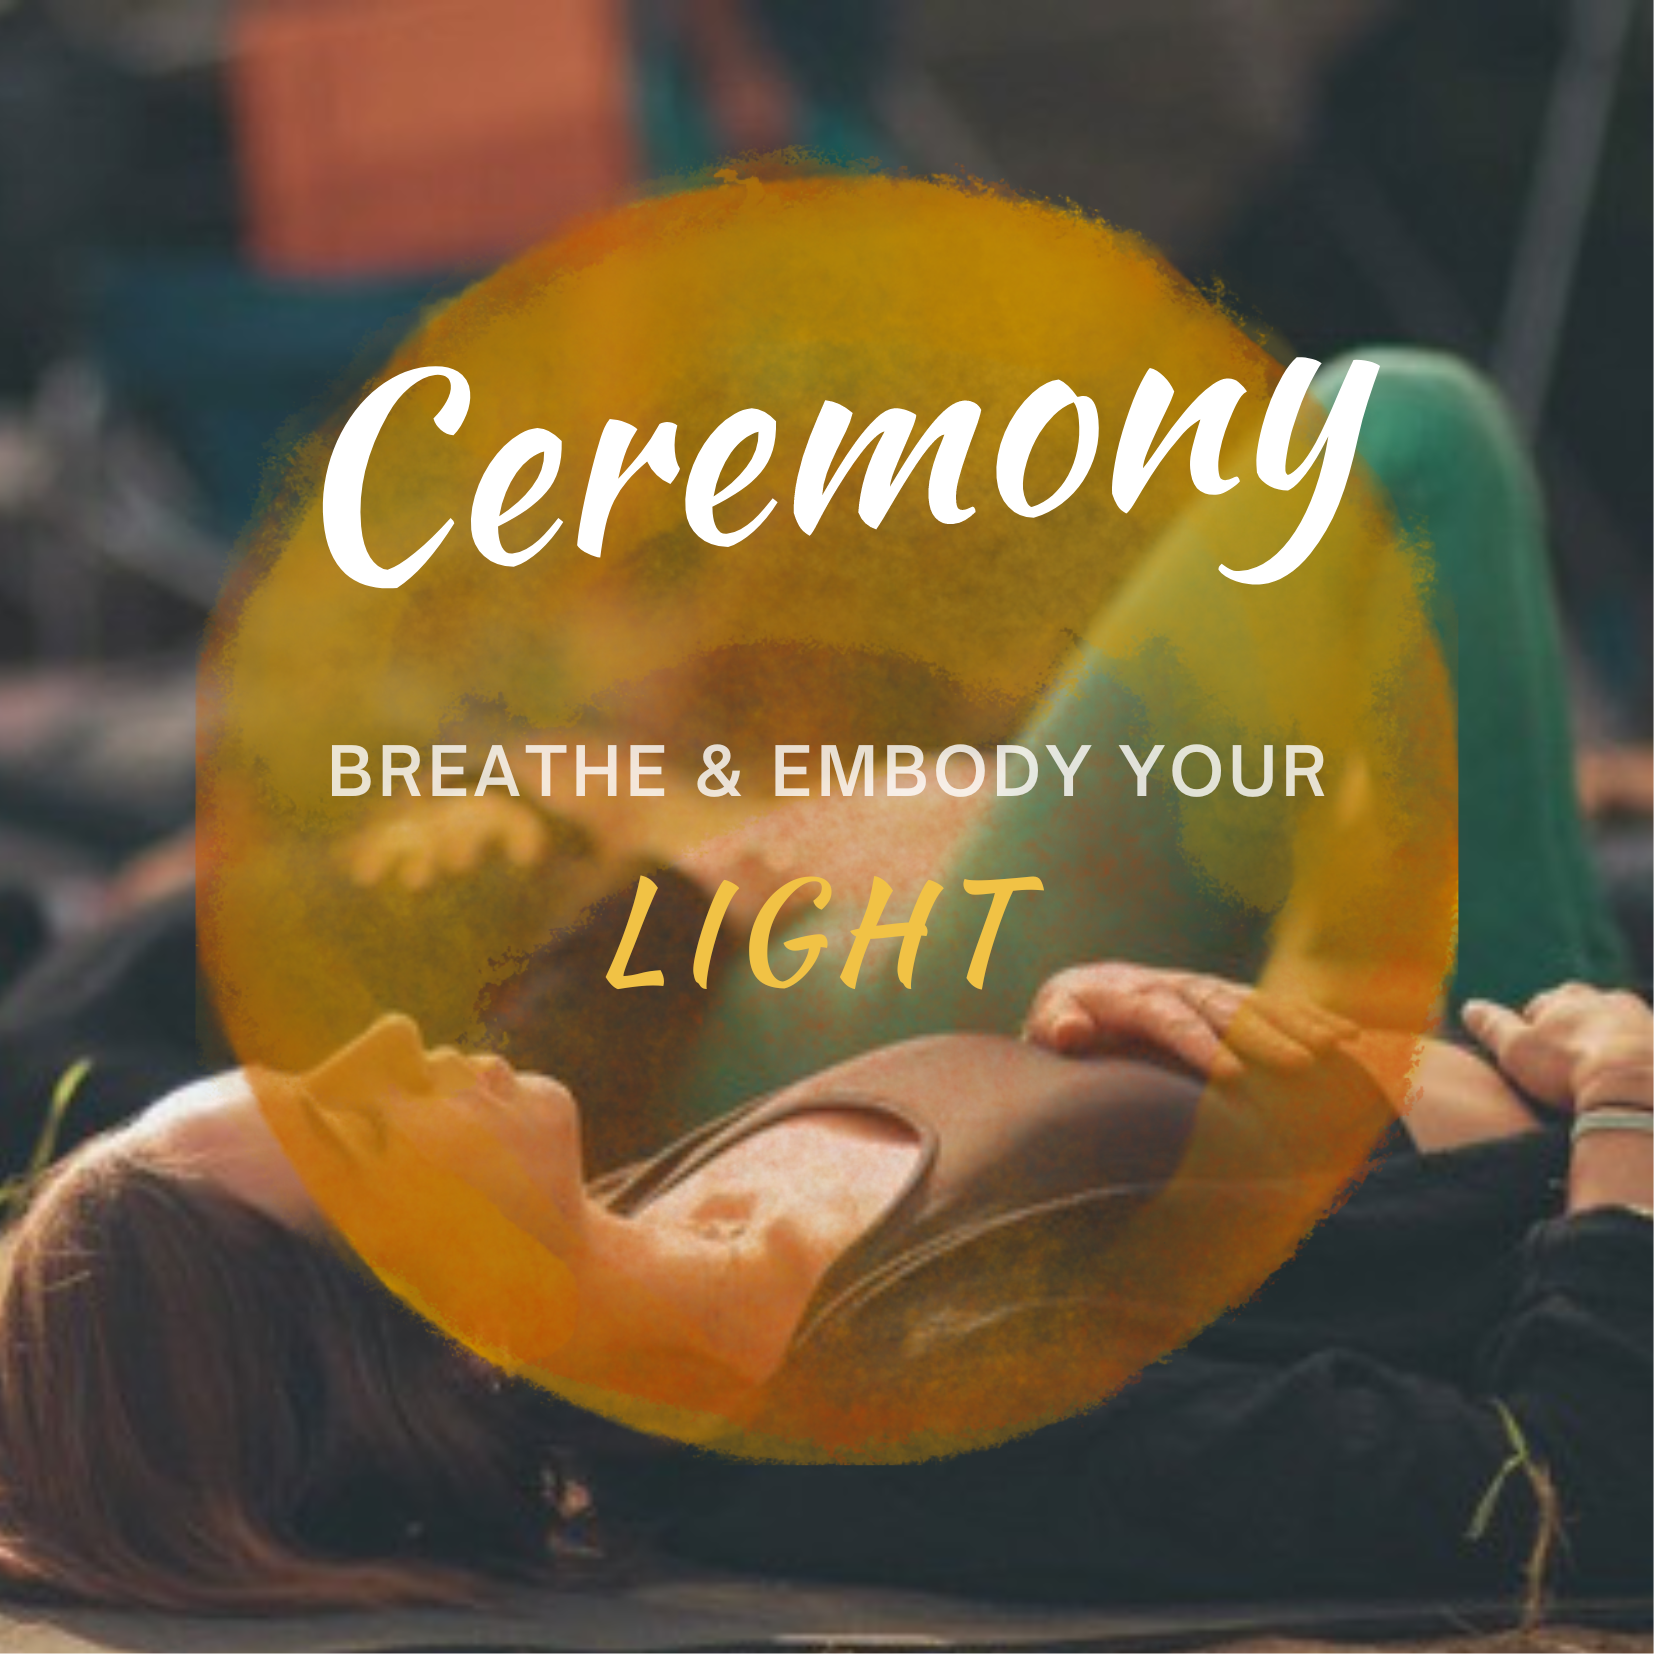 Breathe & embody your light